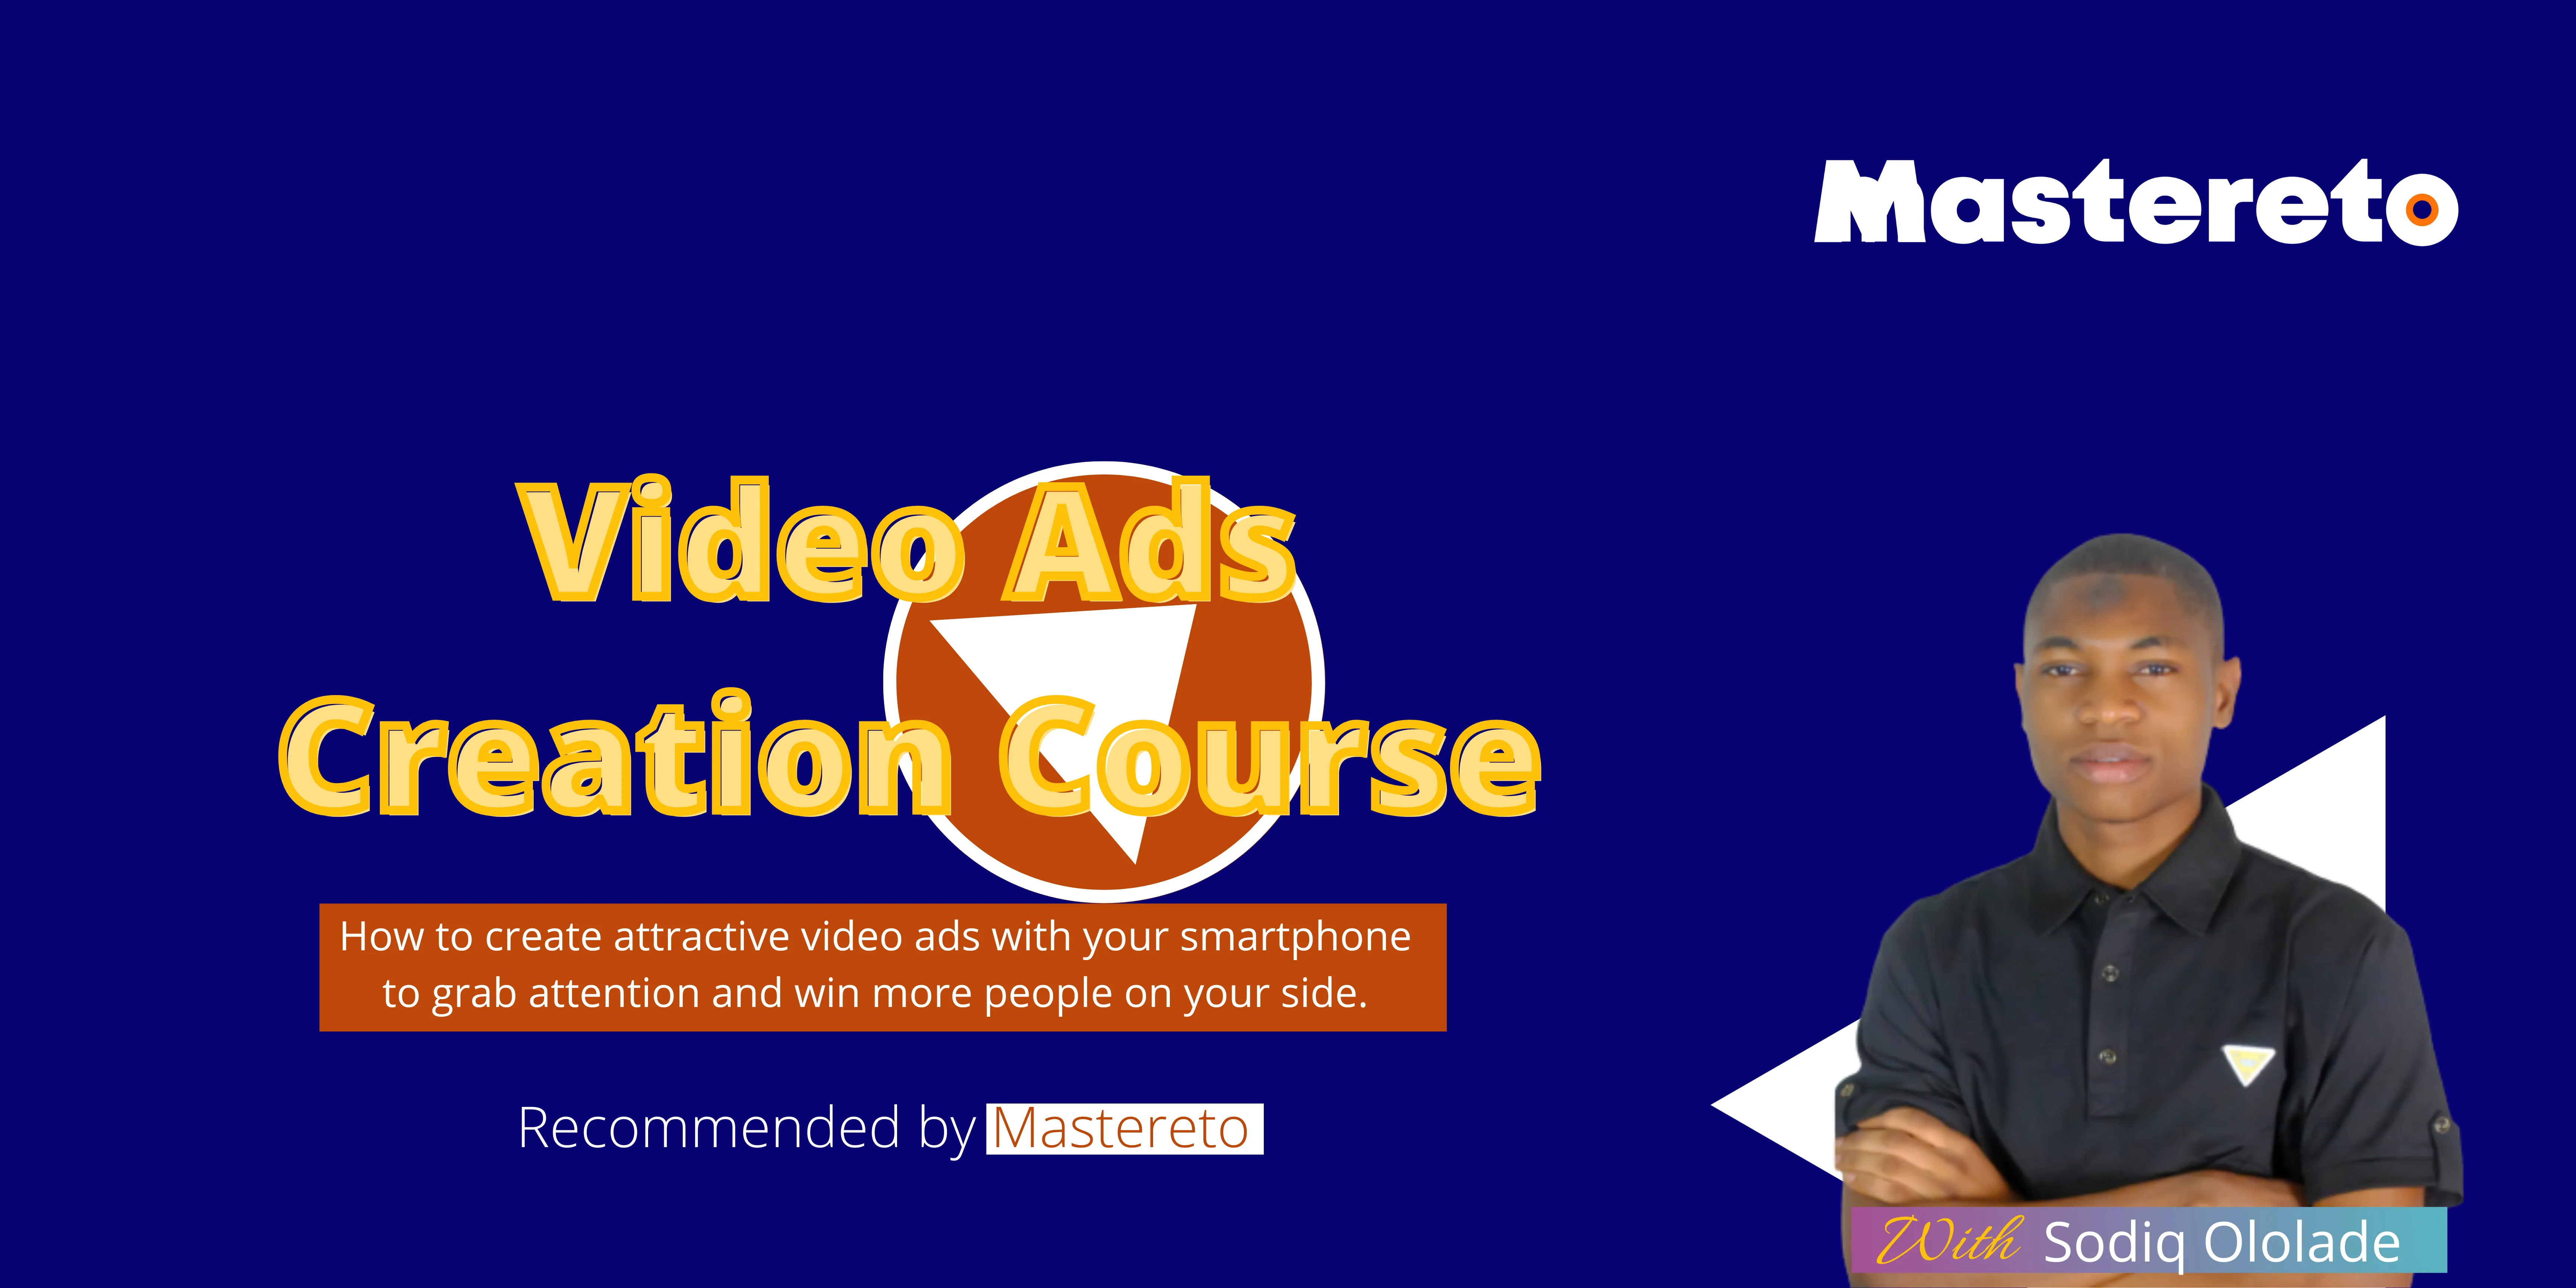 Sodiq Ololade - Video Ads Creation Course - Mastereto